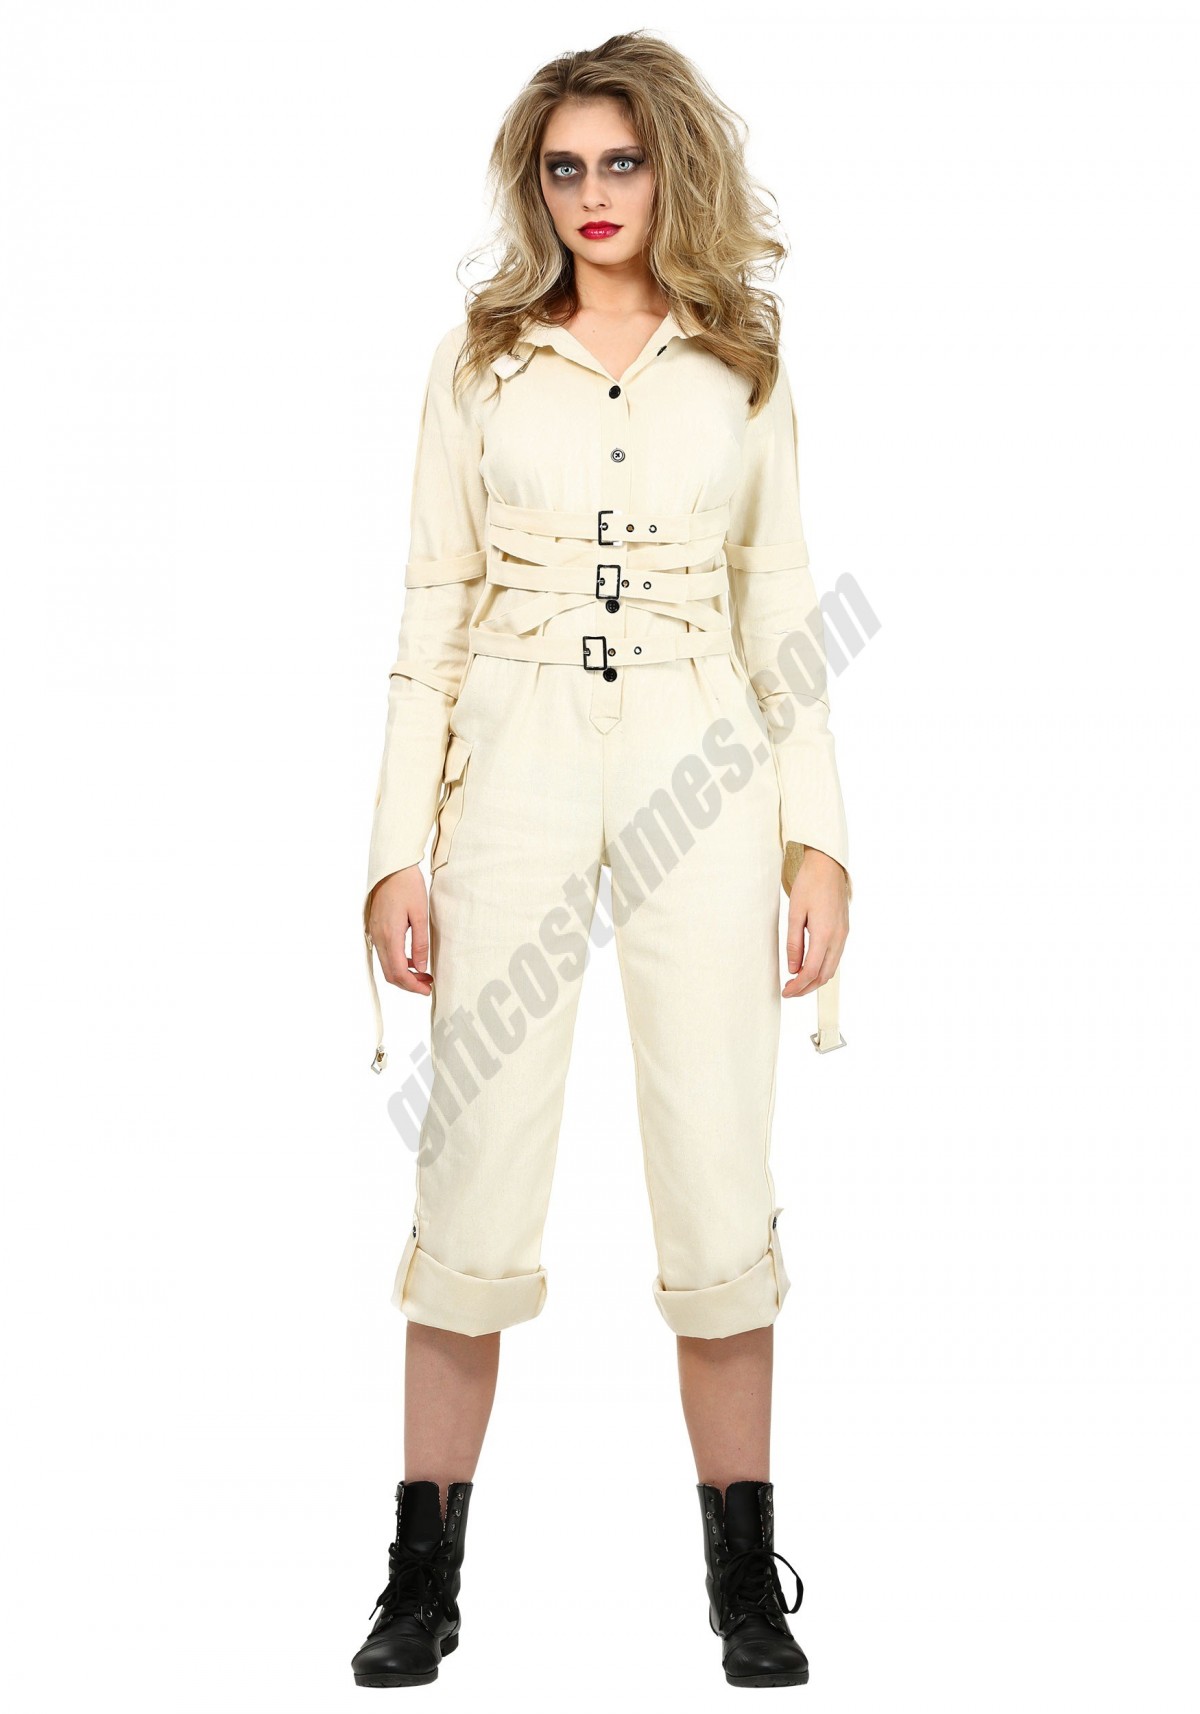 Women's Insane Asylum Straitjacket Costume - -0